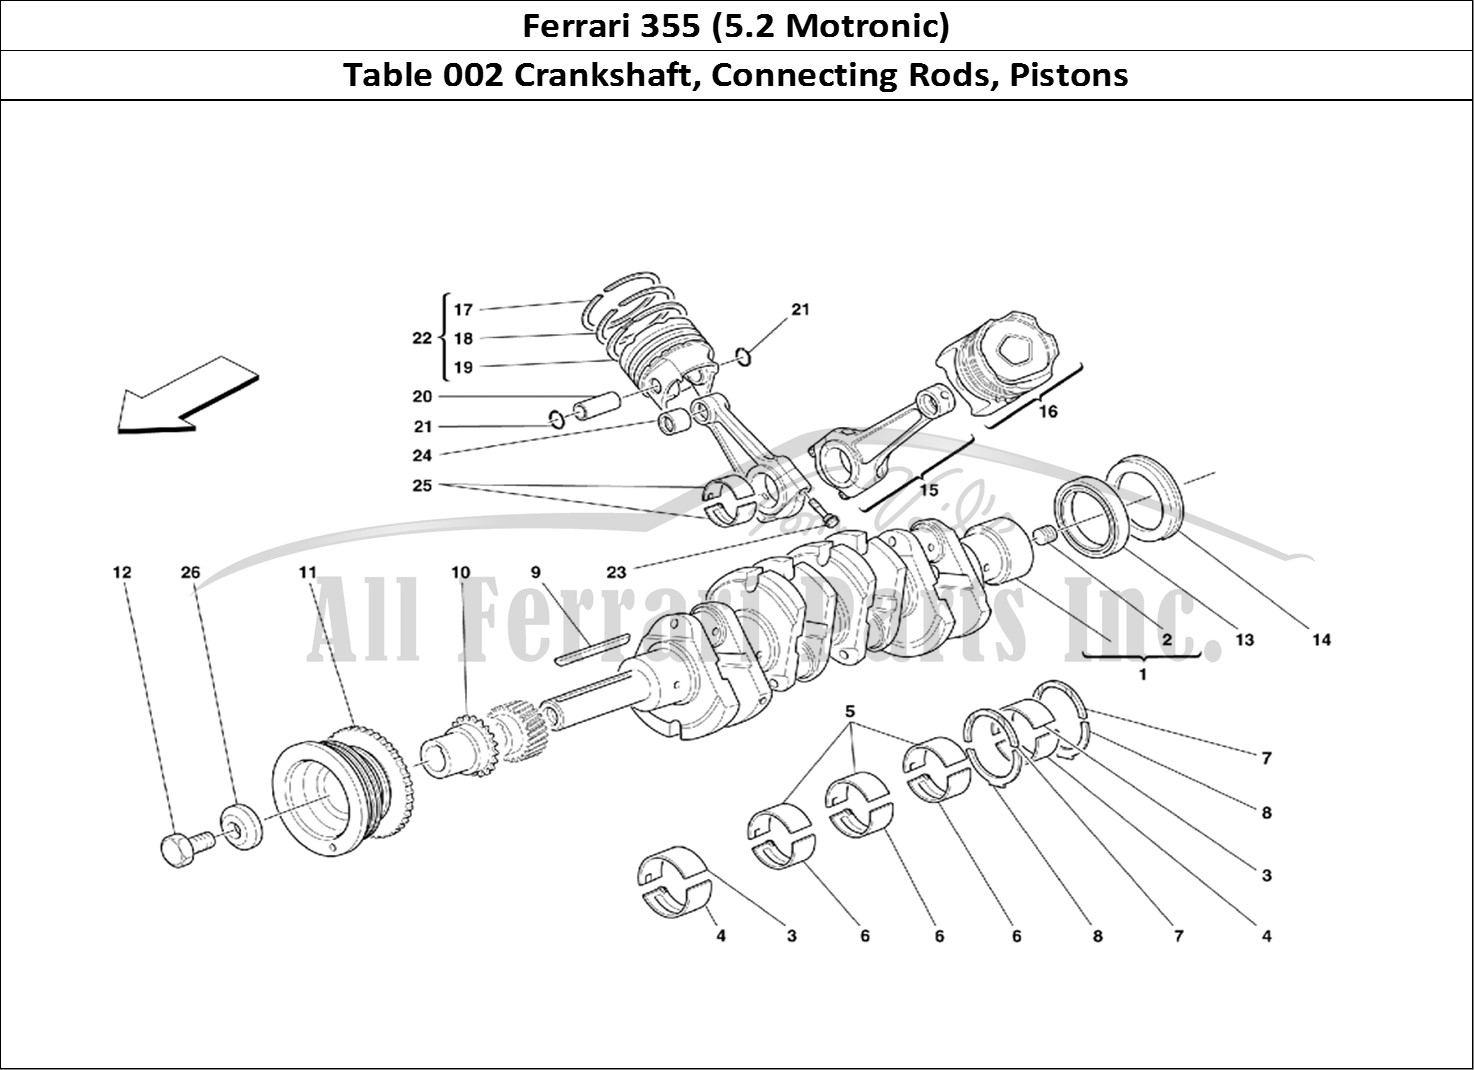 Ferrari Parts Ferrari 355 (5.2 Motronic) Page 002 Crankshaft, Conrods And P